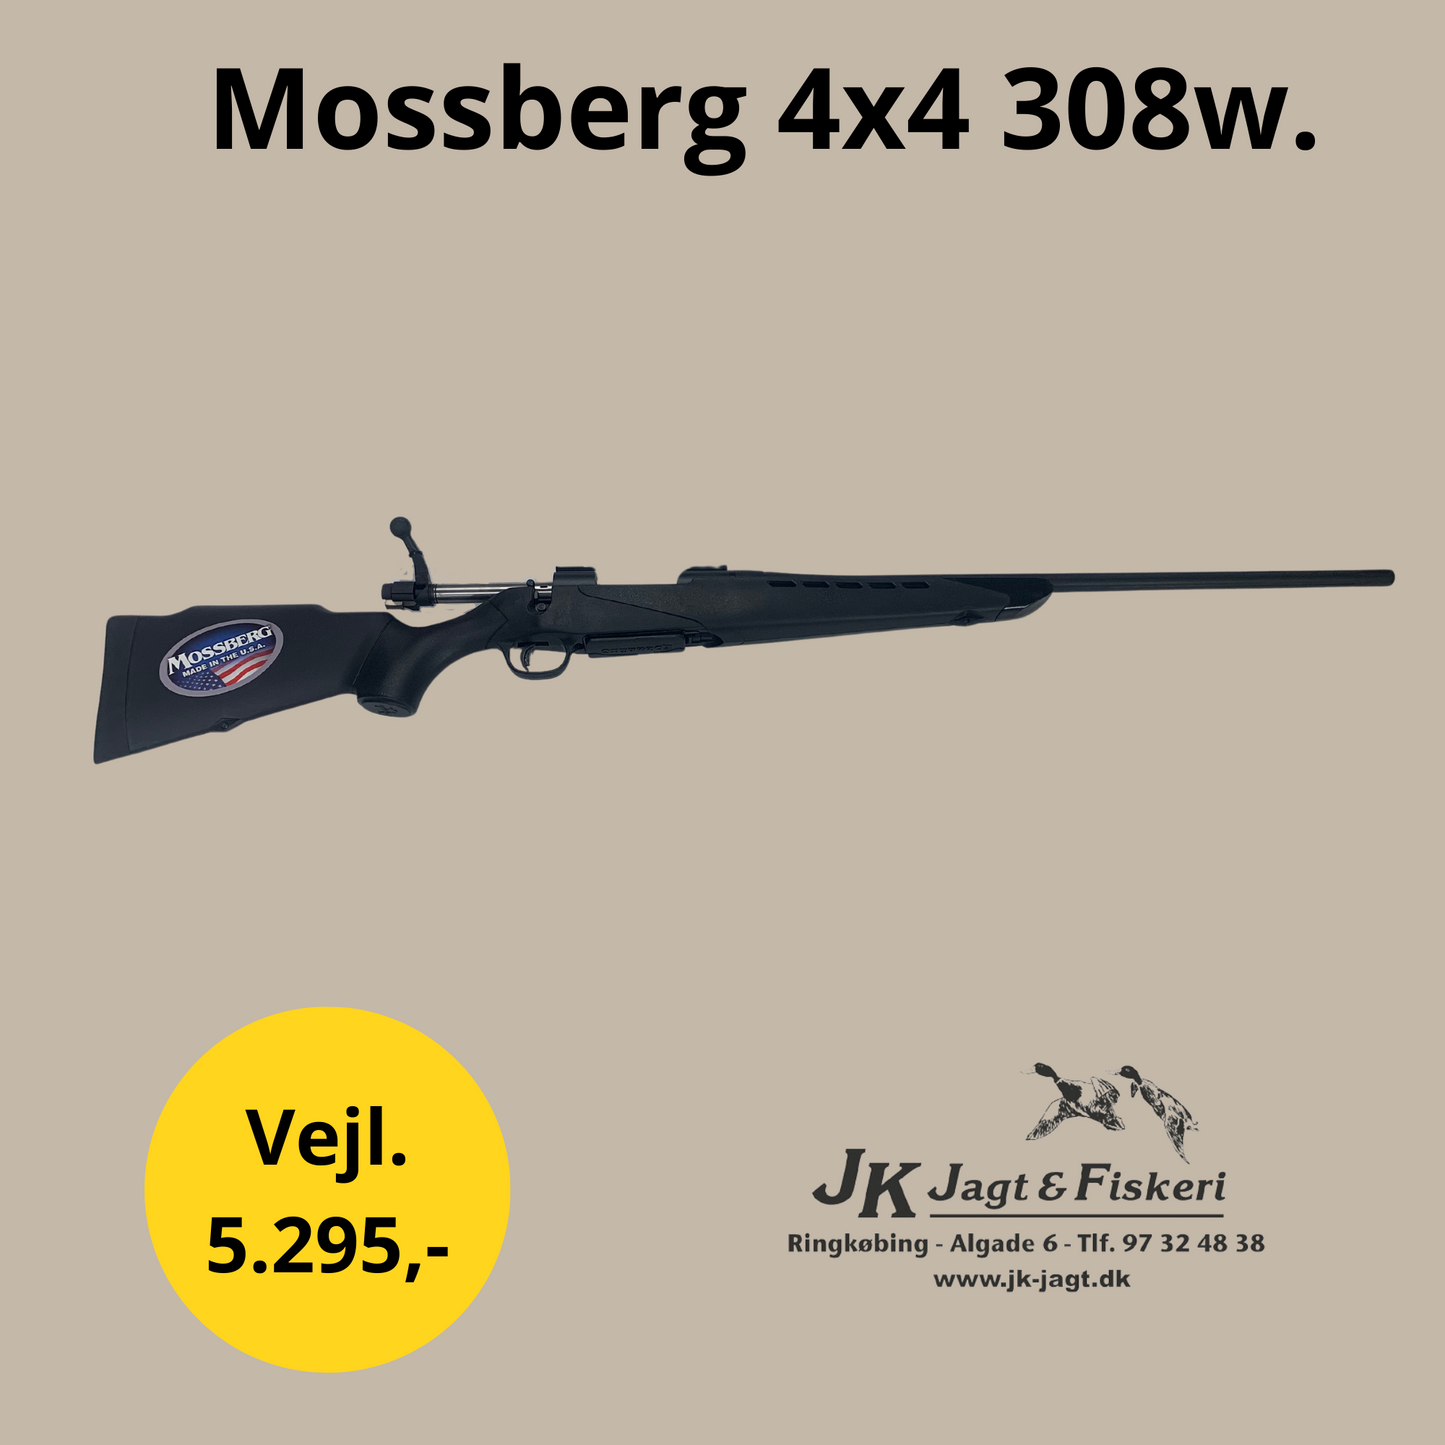 Mossberg 4x4 308w.